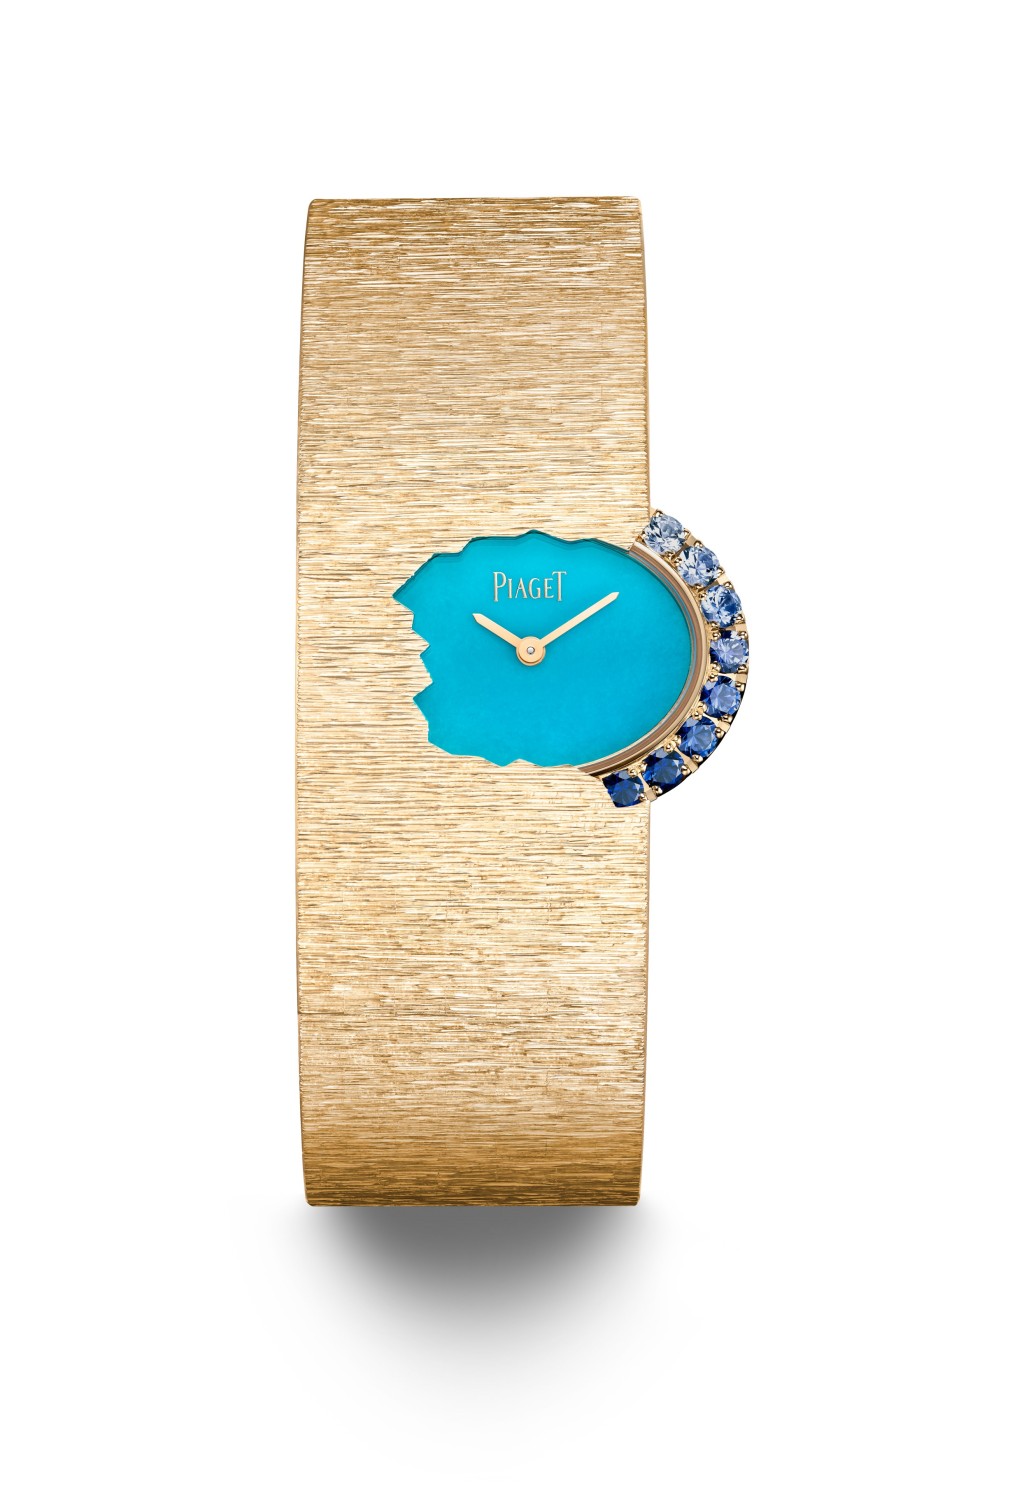 Piaget Limelight High Jewellery Cuff Watch，玫瑰金表殼，356P石英機芯，售價待定。